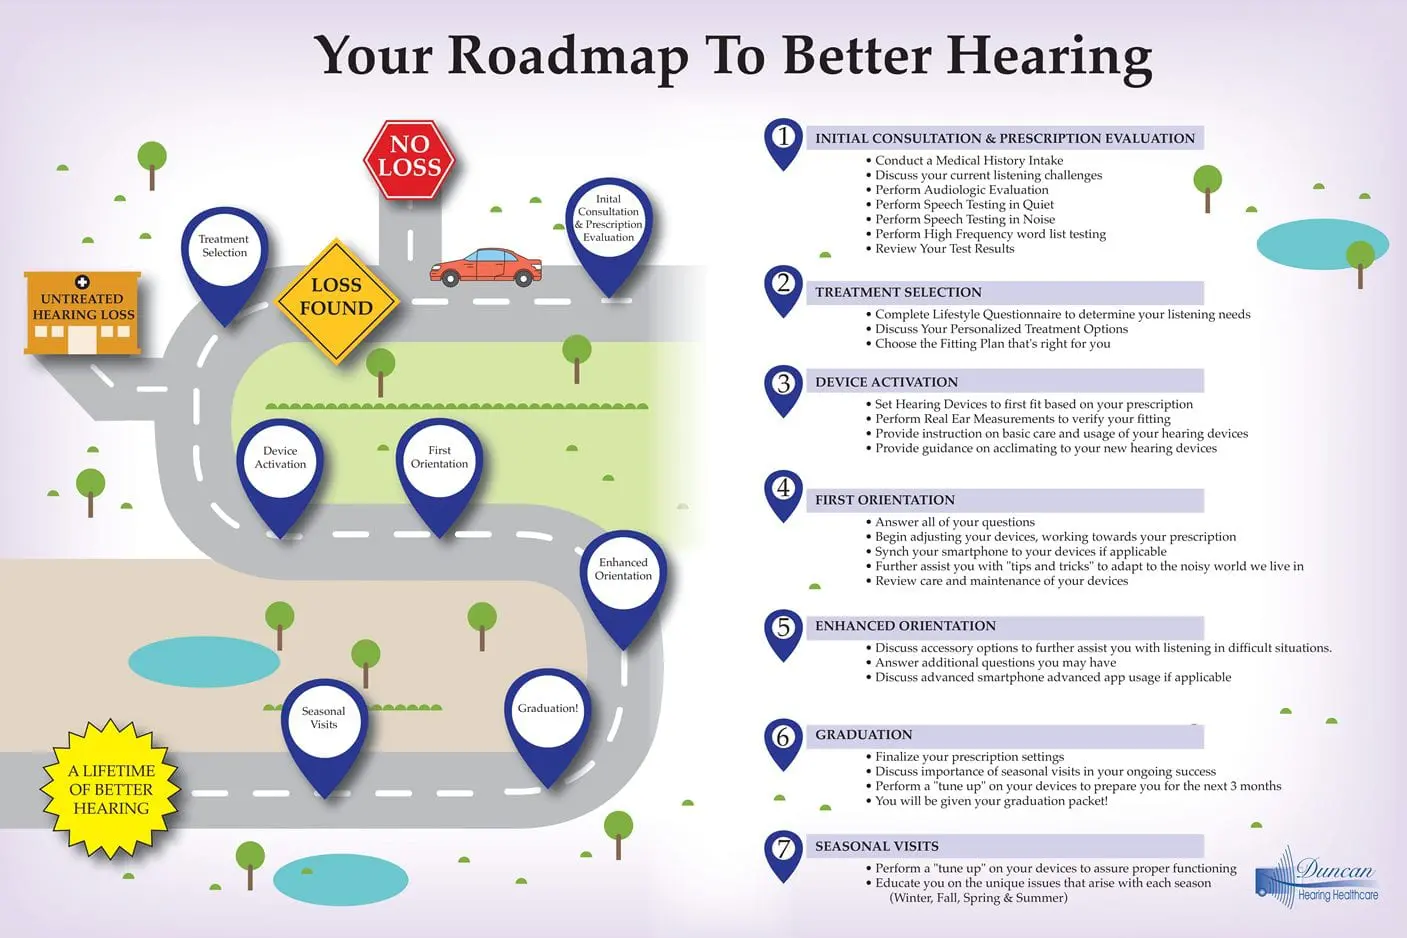 Roadmap to better hearing